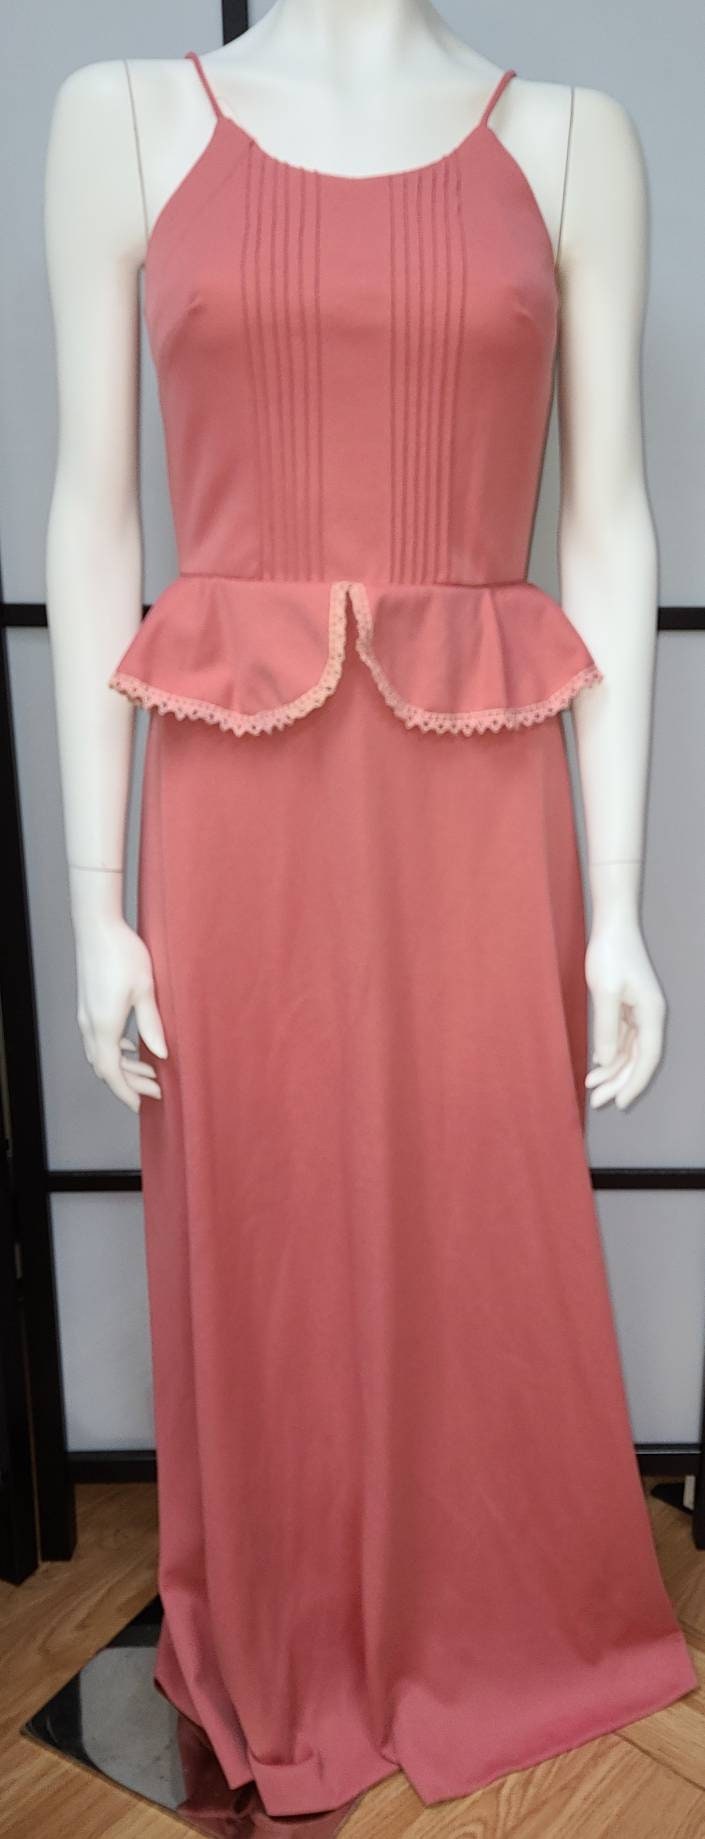 SALE Vintage 1970s Dress Extra Long Dusty Rose Polyester Halter Top Spaghetti Strap Gown Peplum Waist Boho S